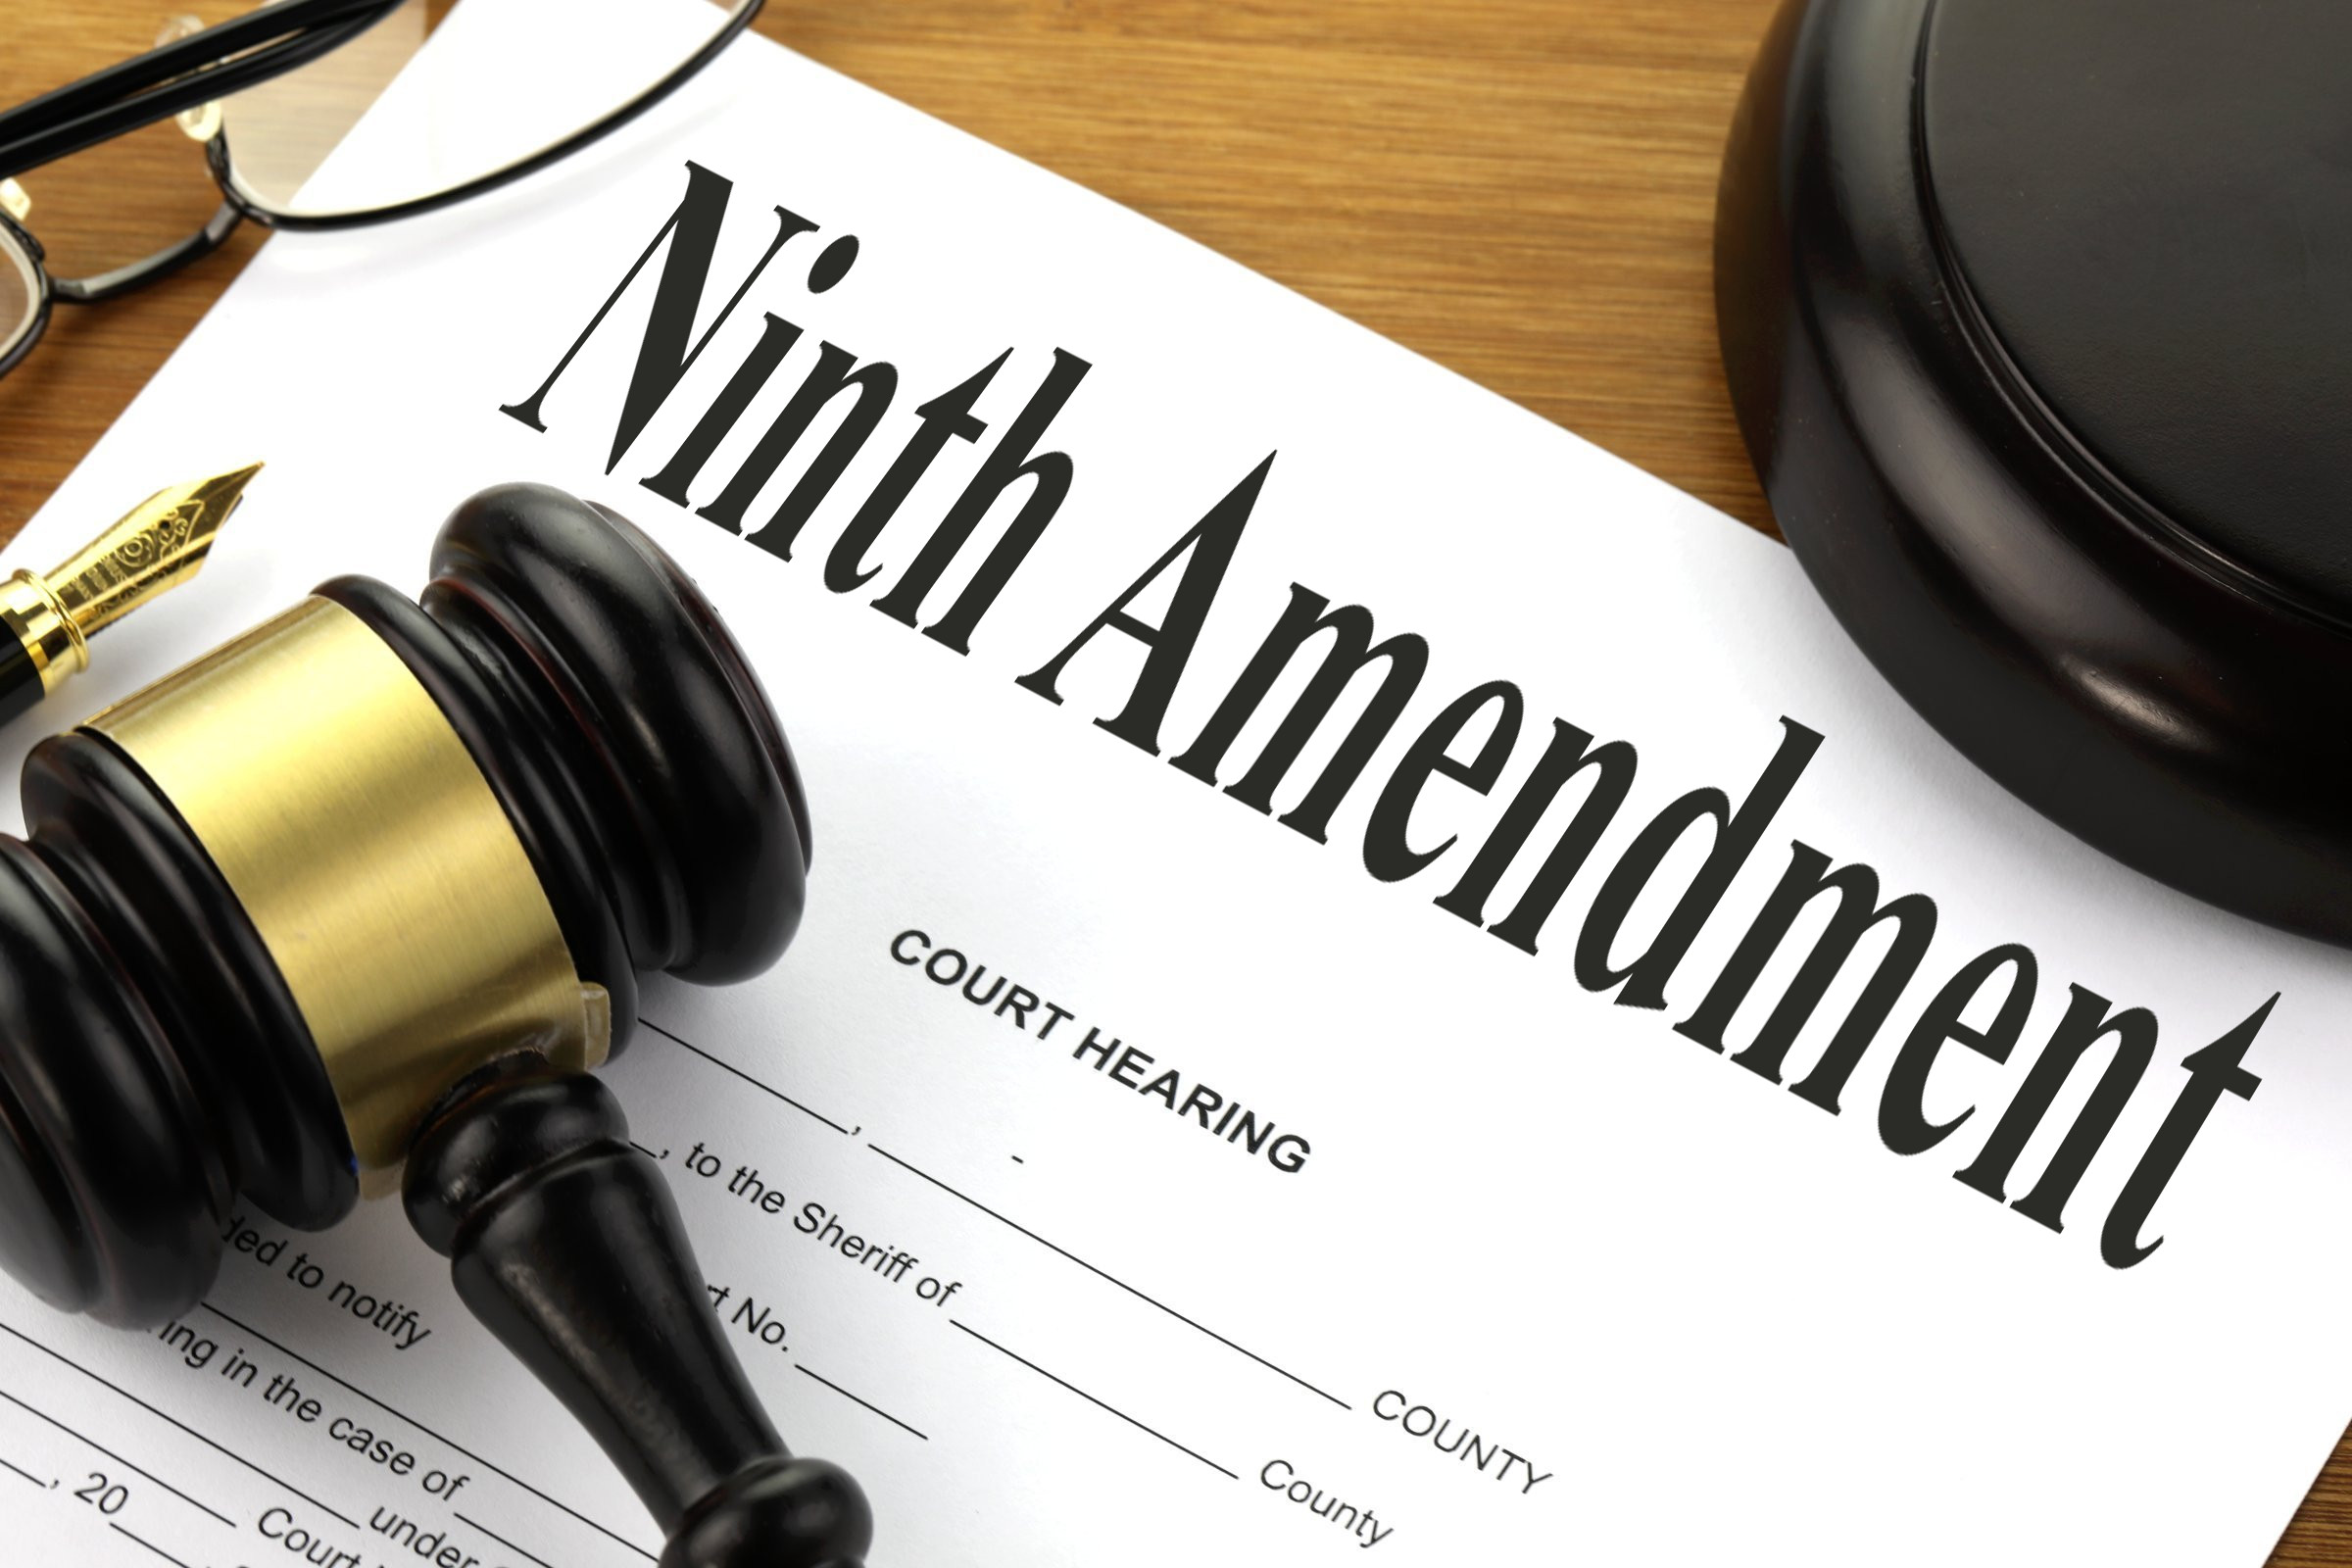 ninth amendment pictures